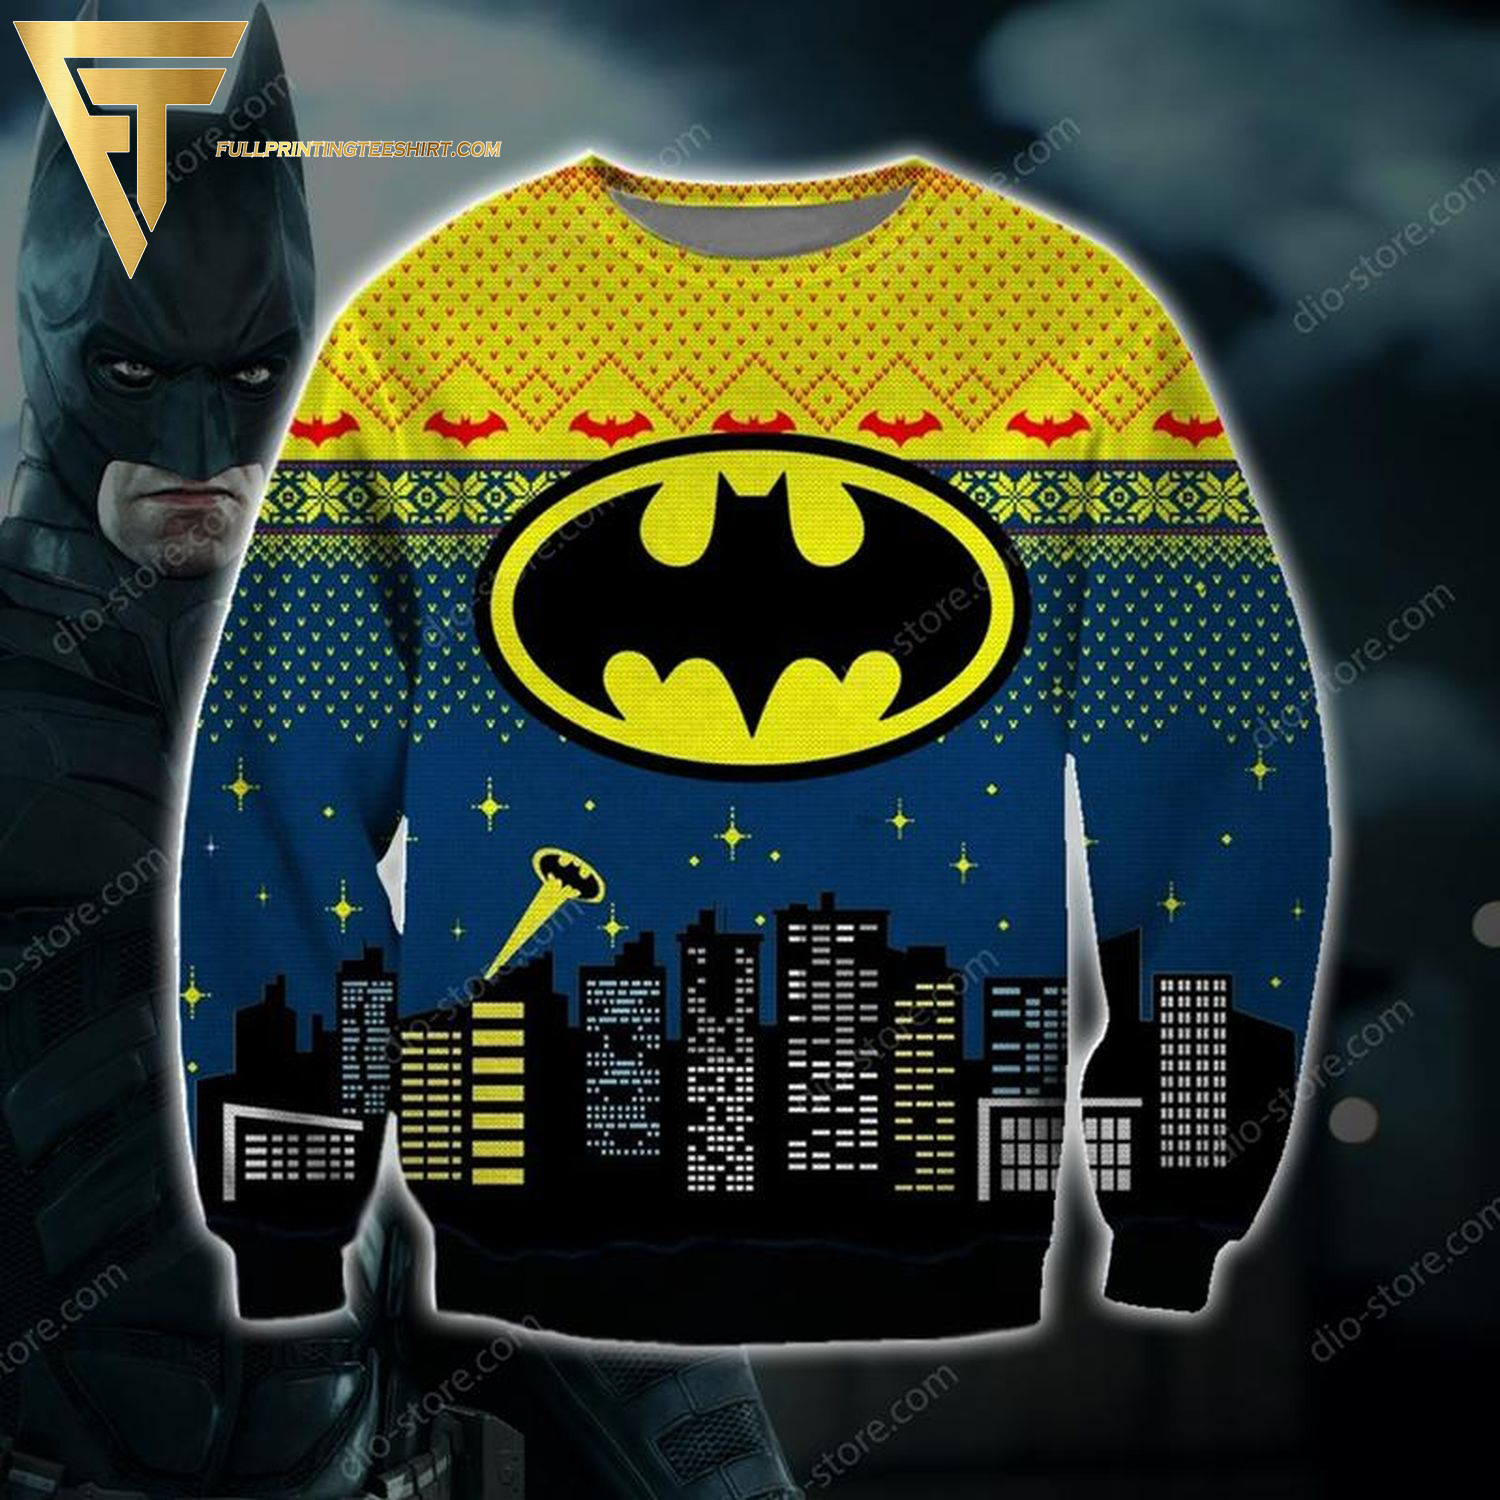 DC Comics Batman Full Print Ugly Christmas Sweater